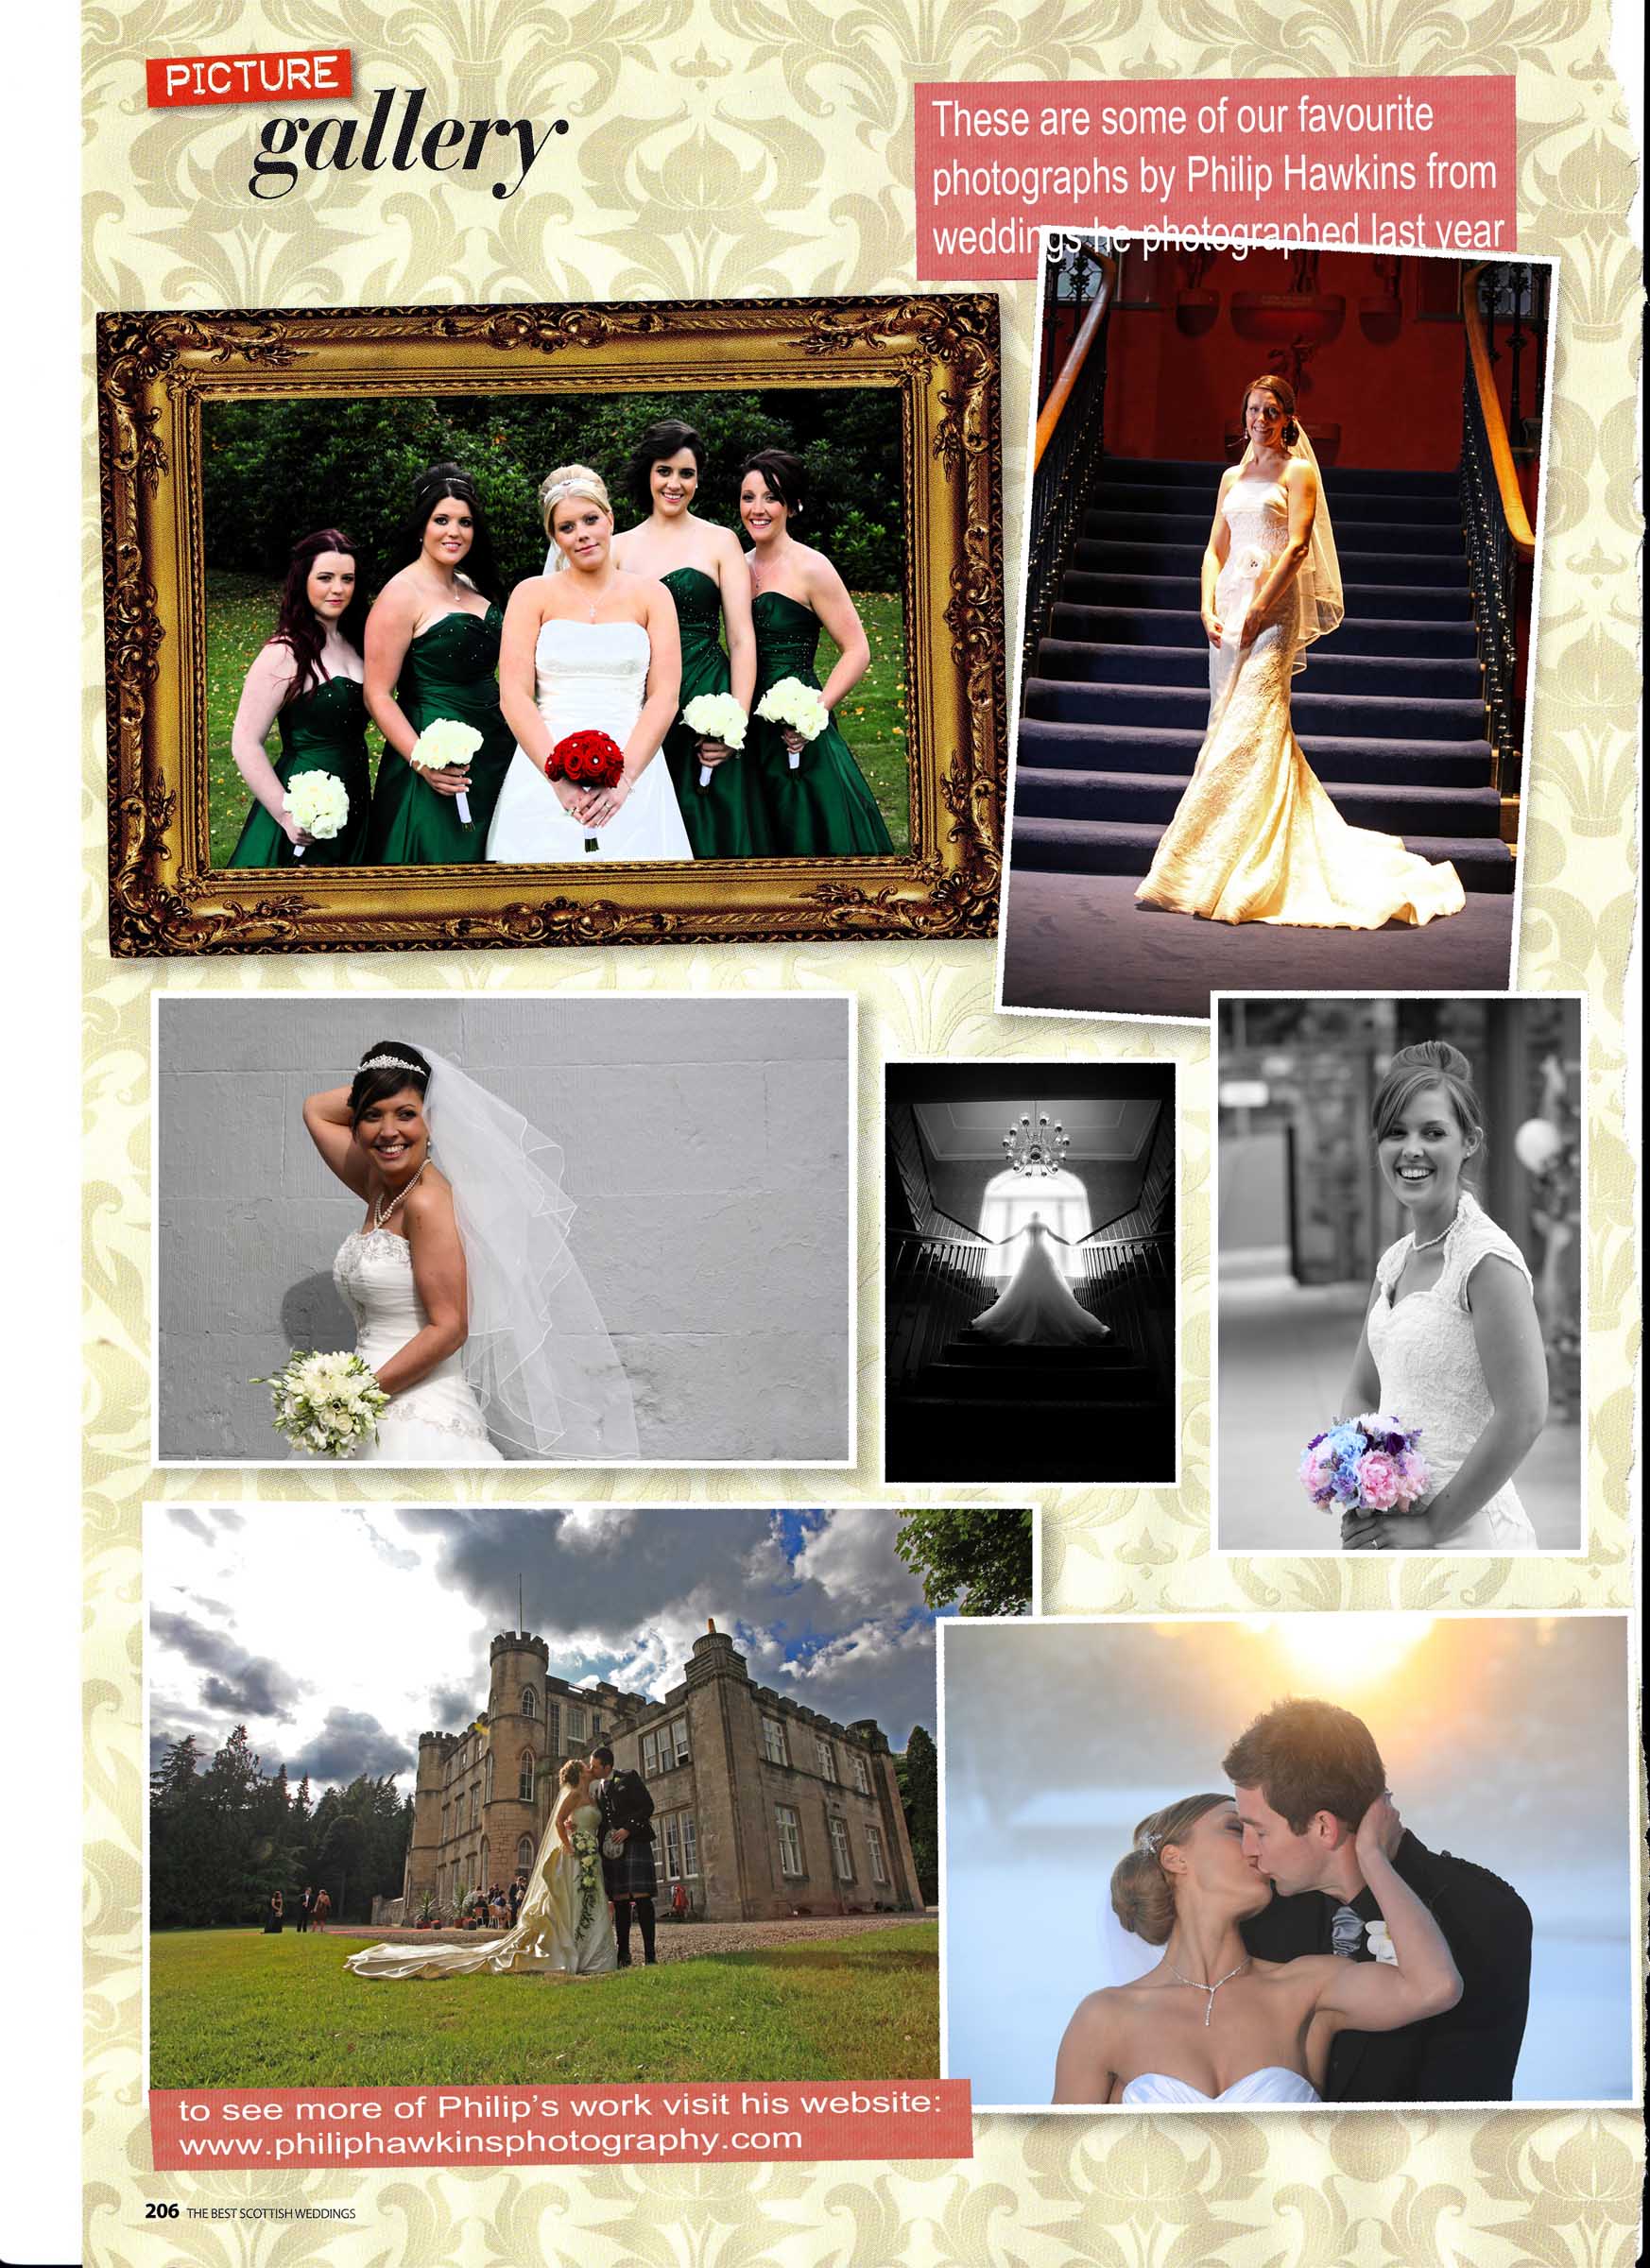 Wedding Photographer magazine feature of Philip Hawkins